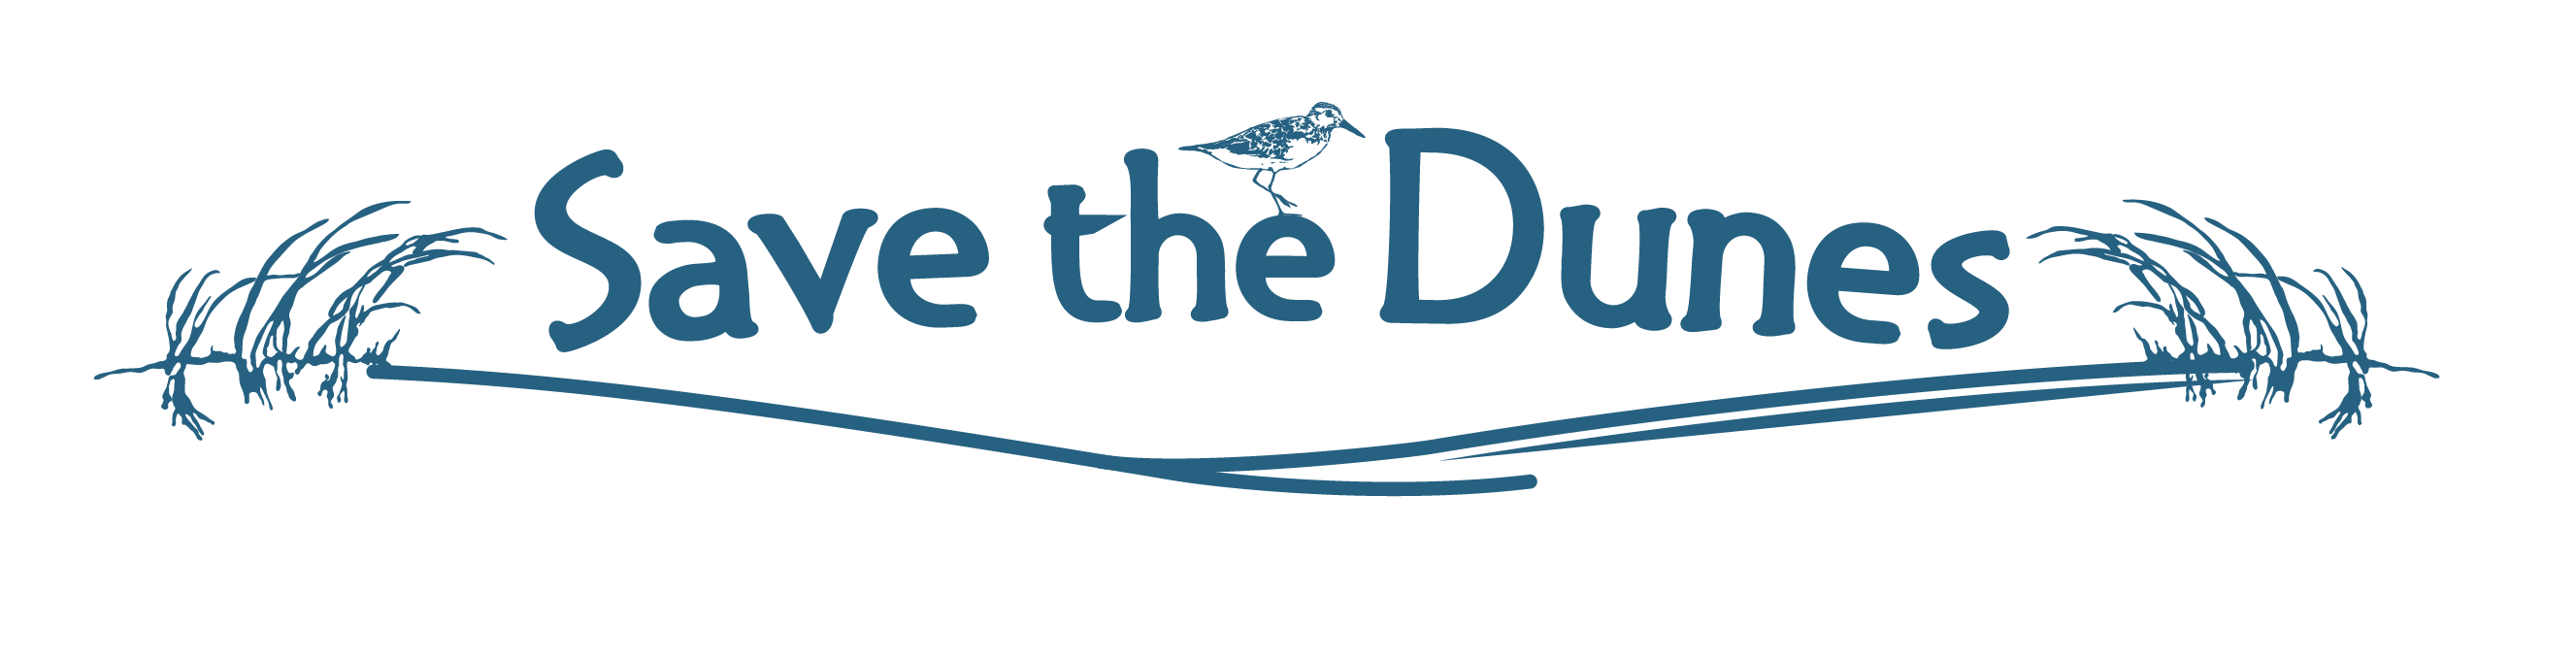 Save the Dunes Seeks Program Coordinator, Community Engagement